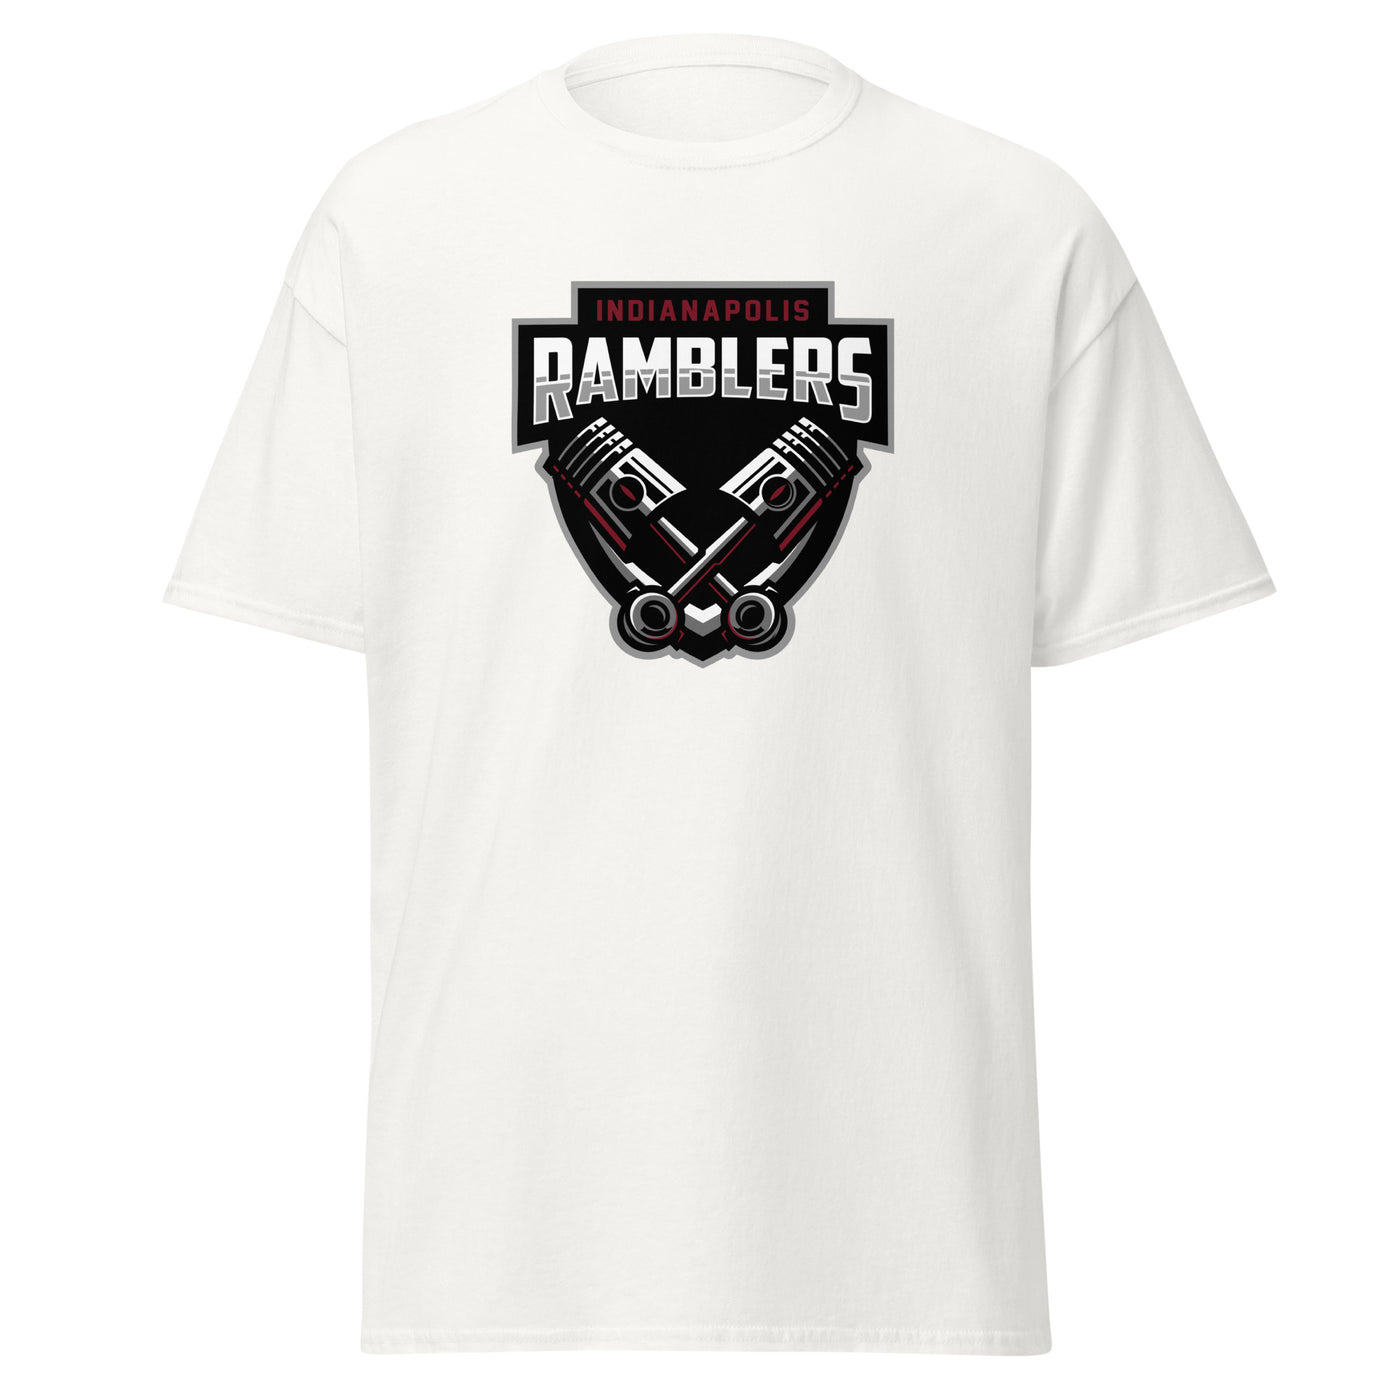 Indianapolis Ramblers Unisex T-Shirt